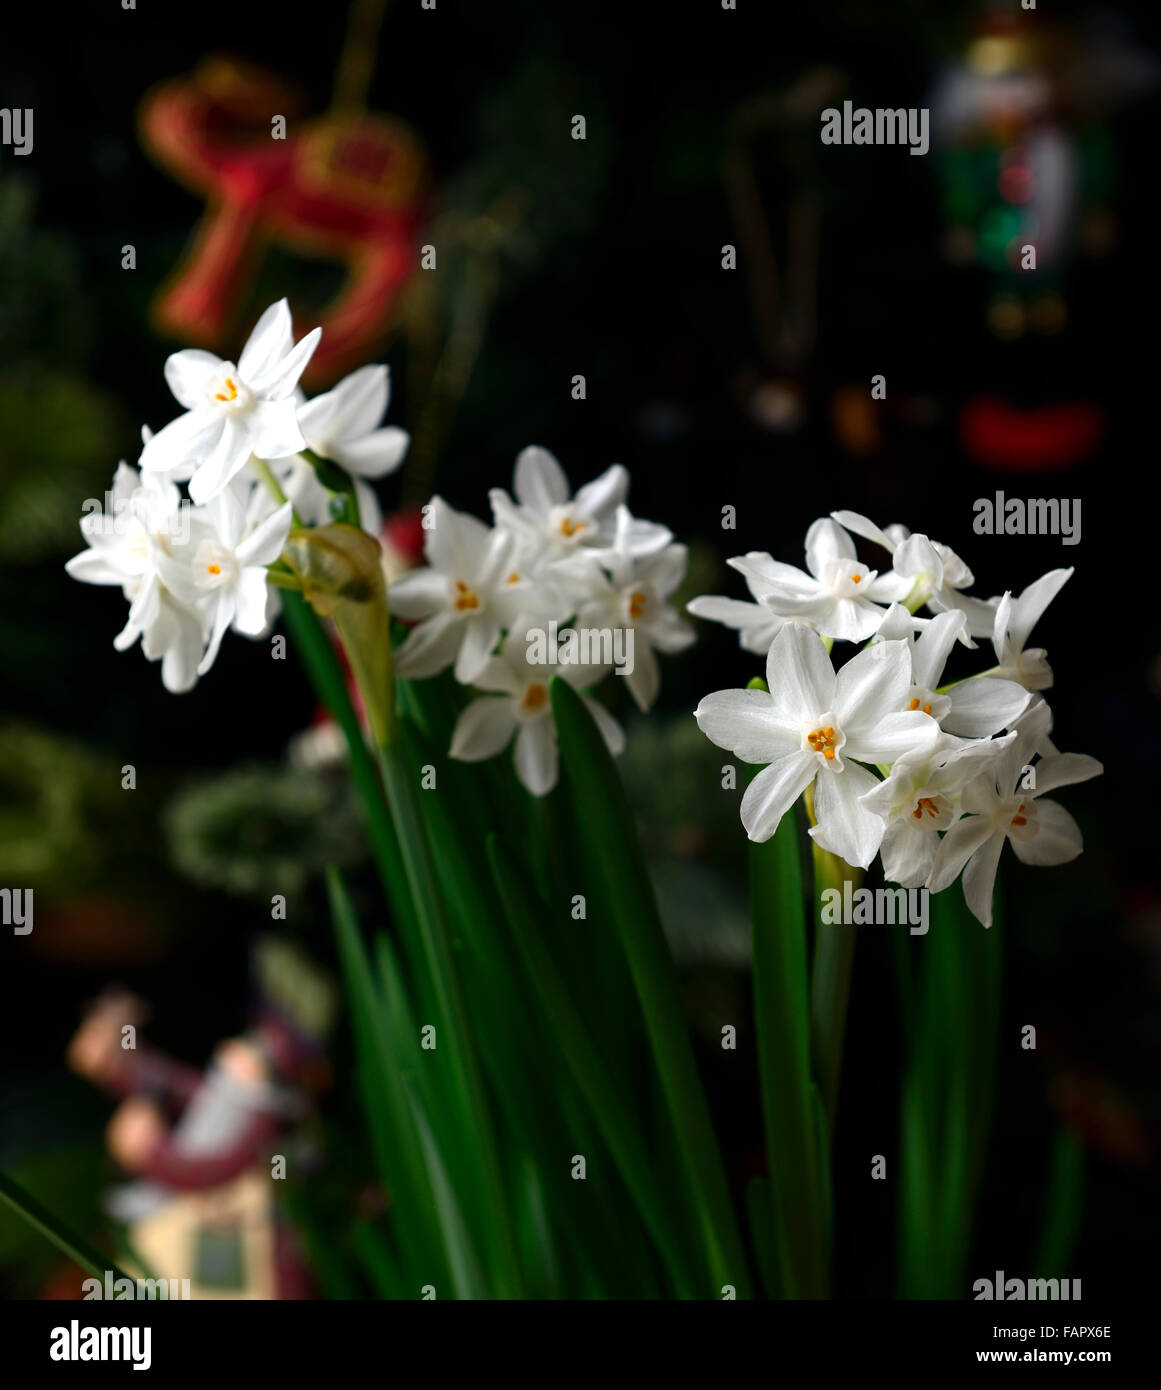 Pianta Fiori Bianchi Profumati.Narcissus Ziva Paperwhites Piante Fiori Bianchi Fioritura Di Bulbi